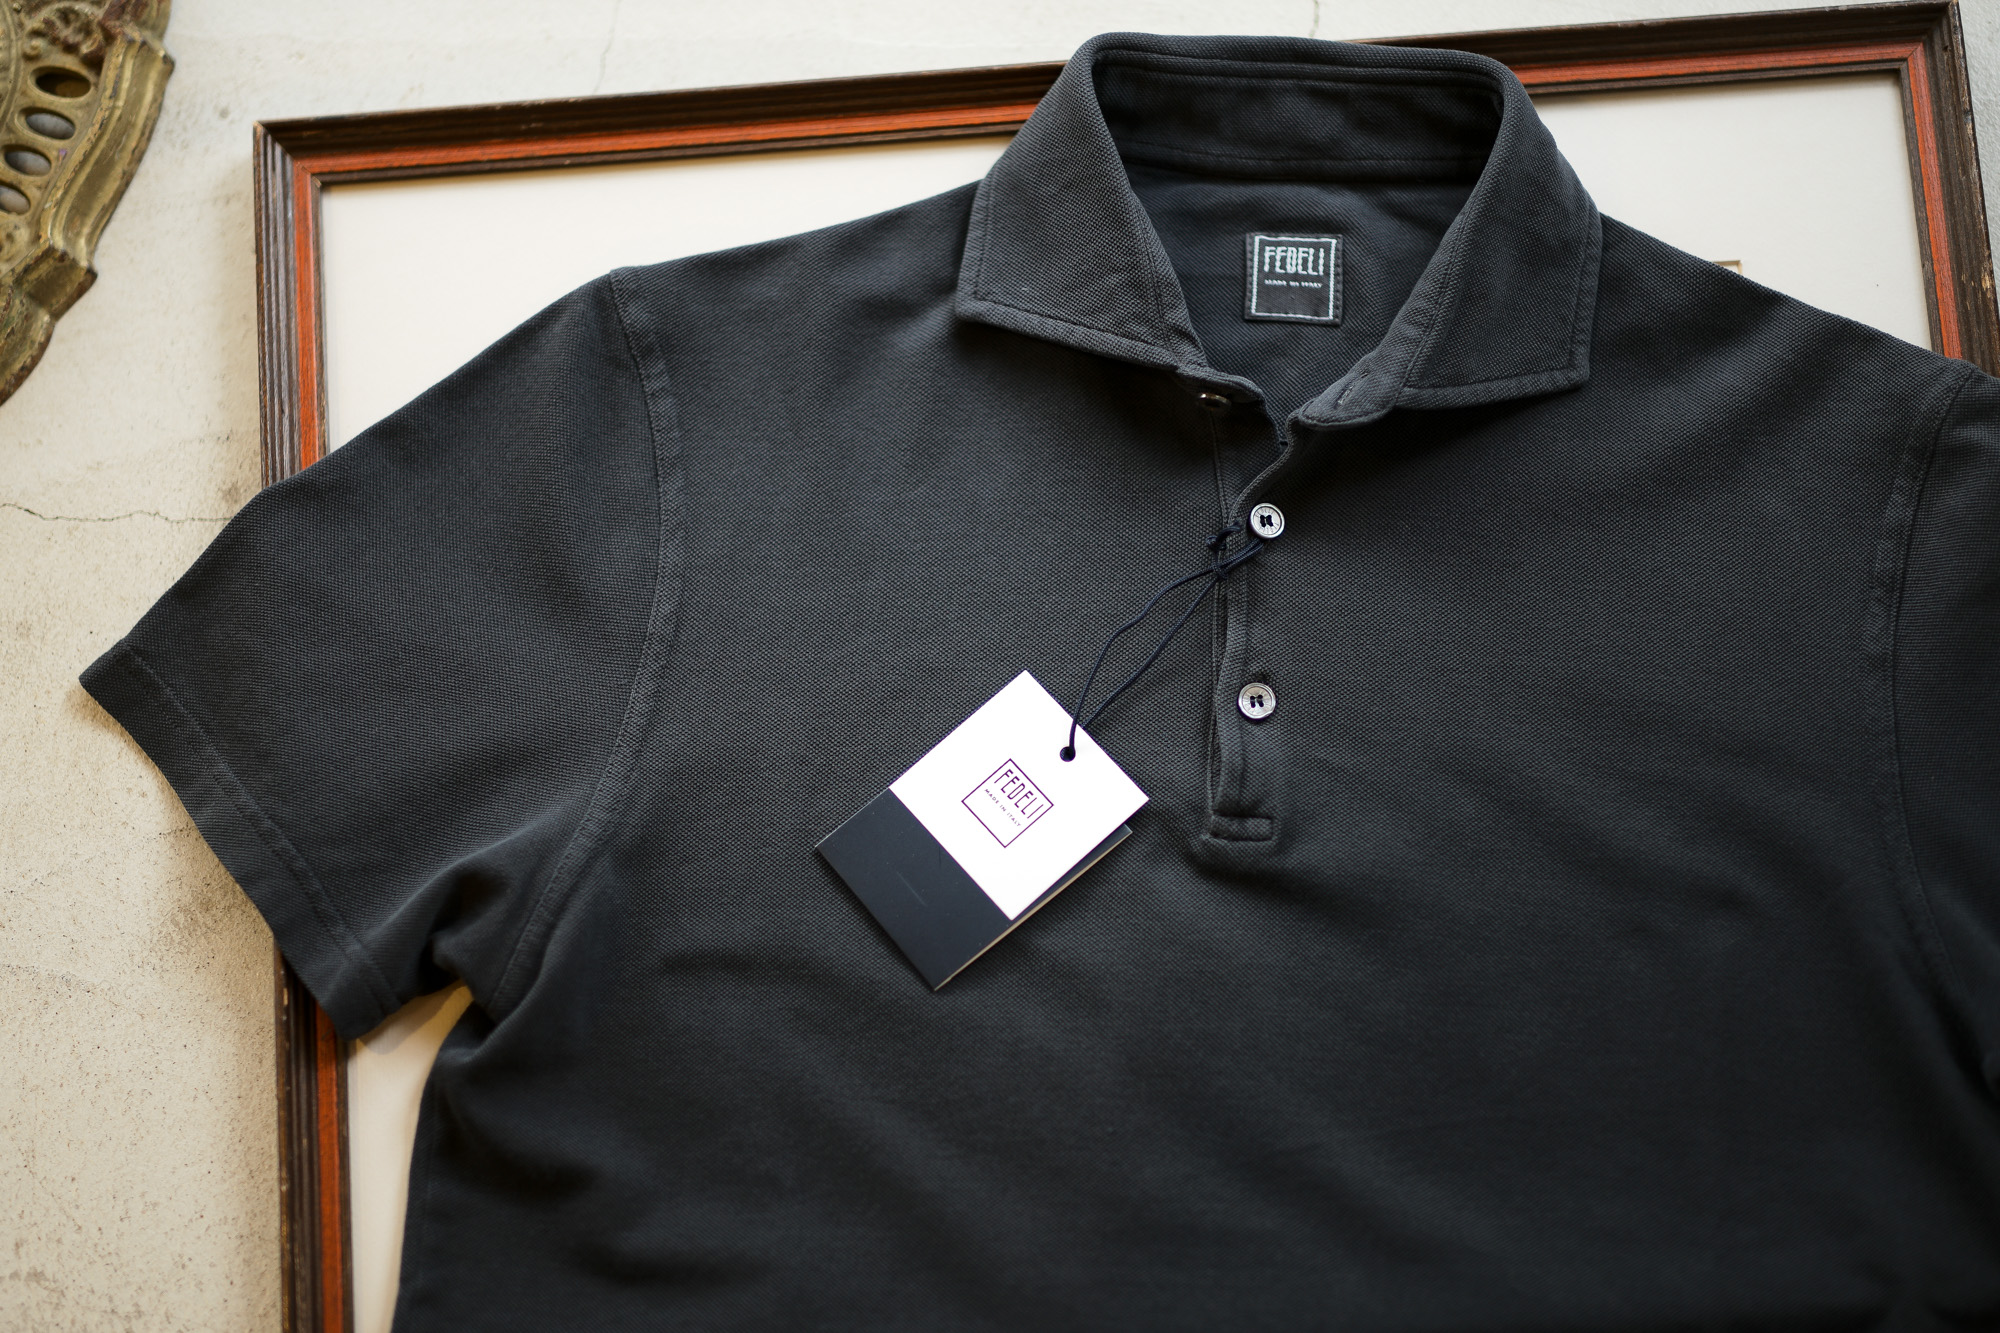 FEDELI (フェデーリ) Piquet Polo Shirt (ピケ ポロシャツ) カノコ ポロシャツ BLACK(ブラック・36) made in italy (イタリア製) 2019 春夏新作 愛知 名古屋 altoediritto アルトエデリット